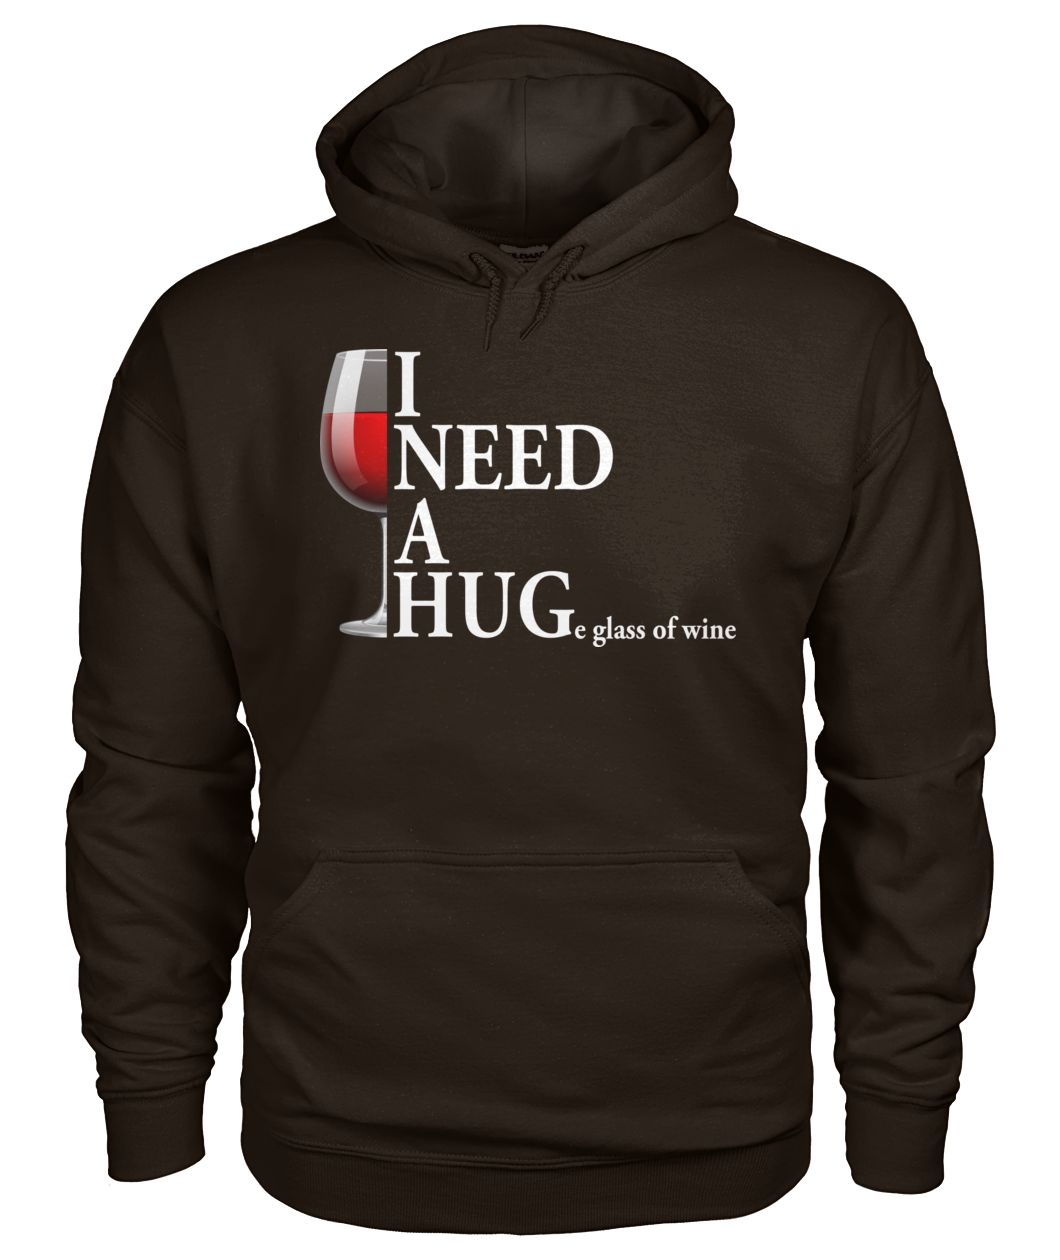 I need a huge glass of wine gildan hoodie